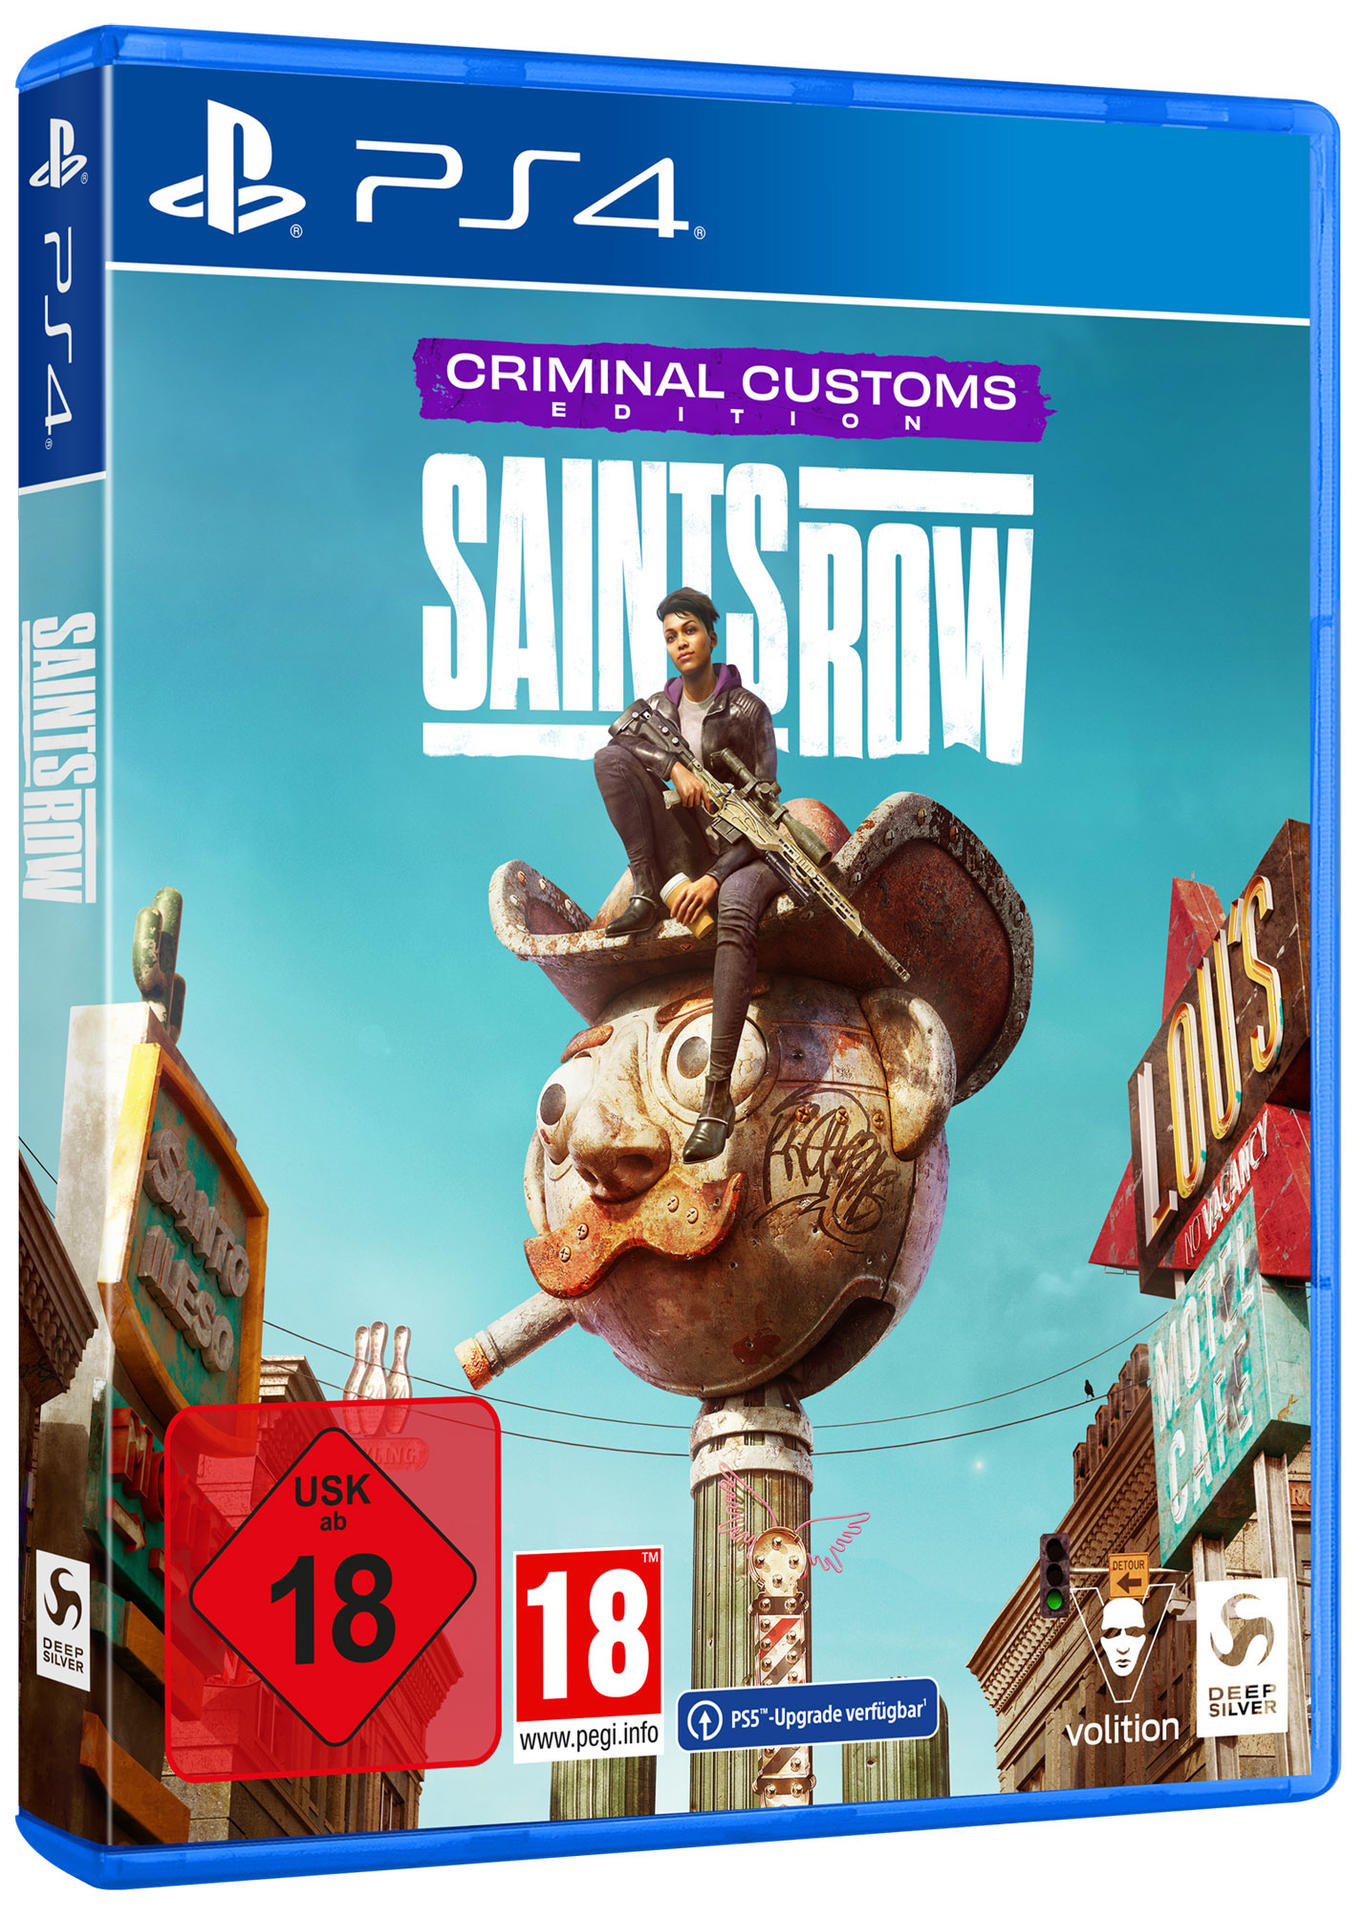 [PlayStation ROW 4] CUSTOMS - CRIMINAL PS4 EDITION SAINTS